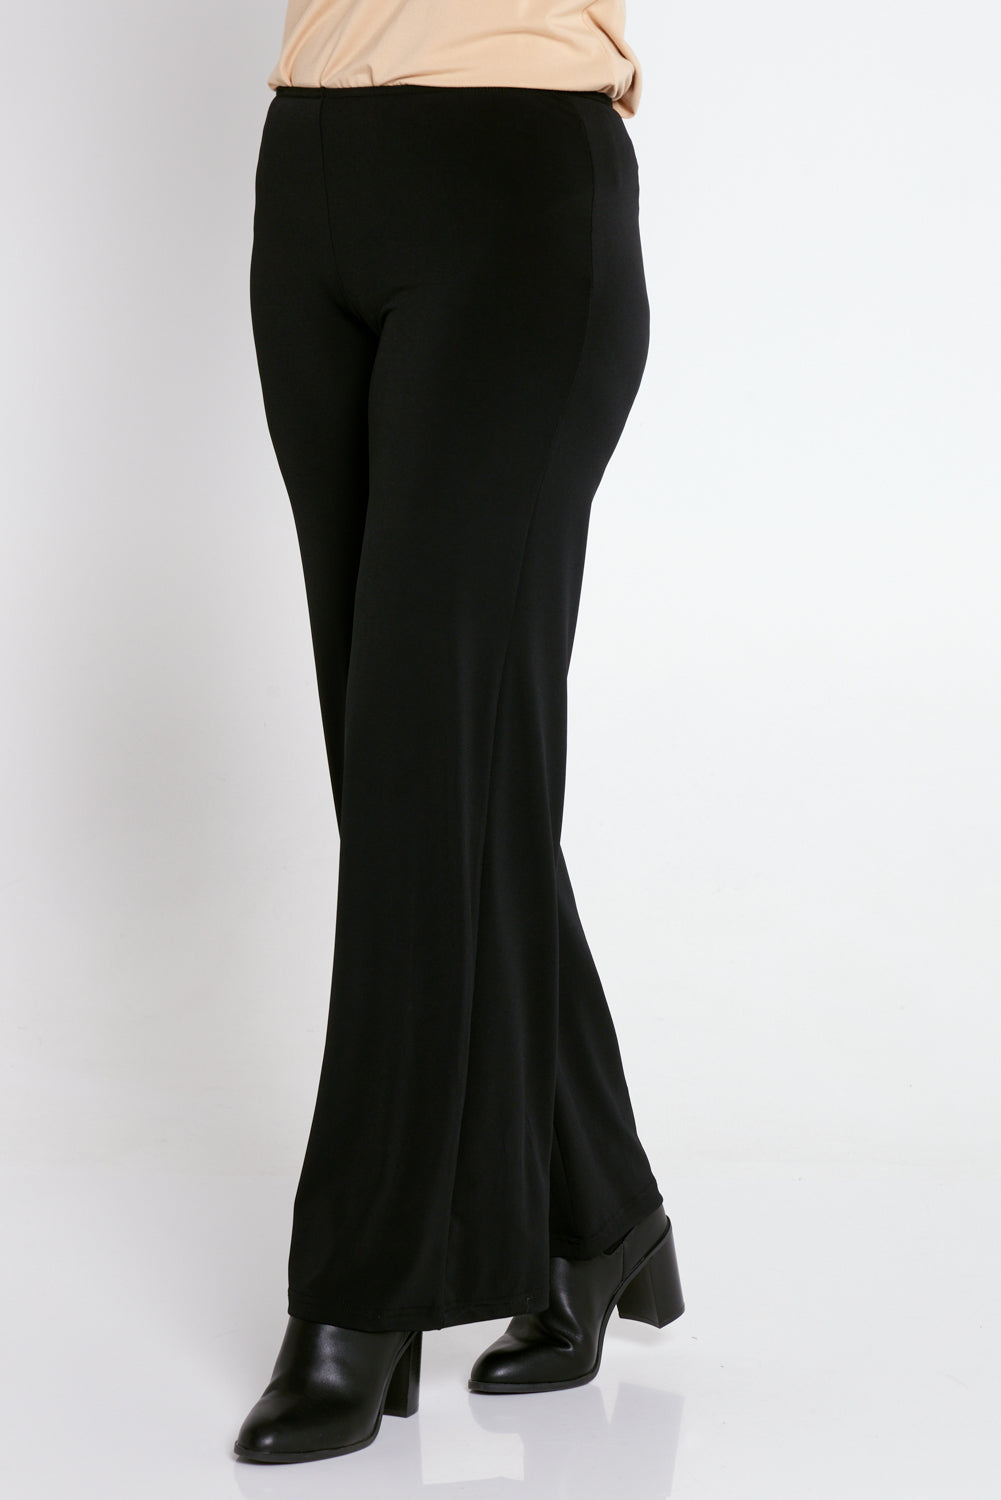 Madison Pants - Black  Australian Made Wide Leg Women's Pants – TULIO  Fashion